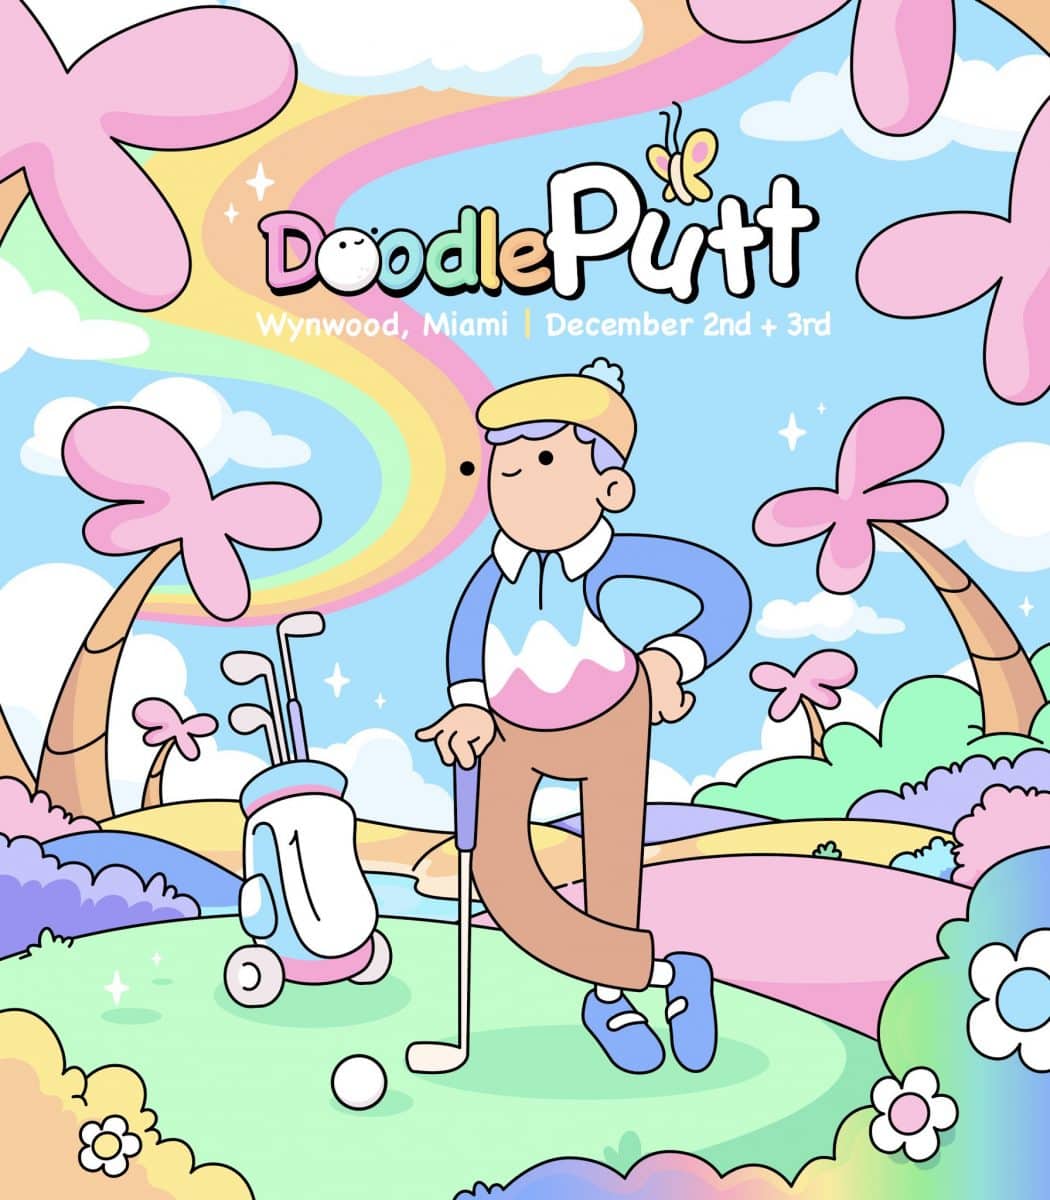 Imagen del póster del evento Doodles Golf que muestra a un personaje en un campo de golf